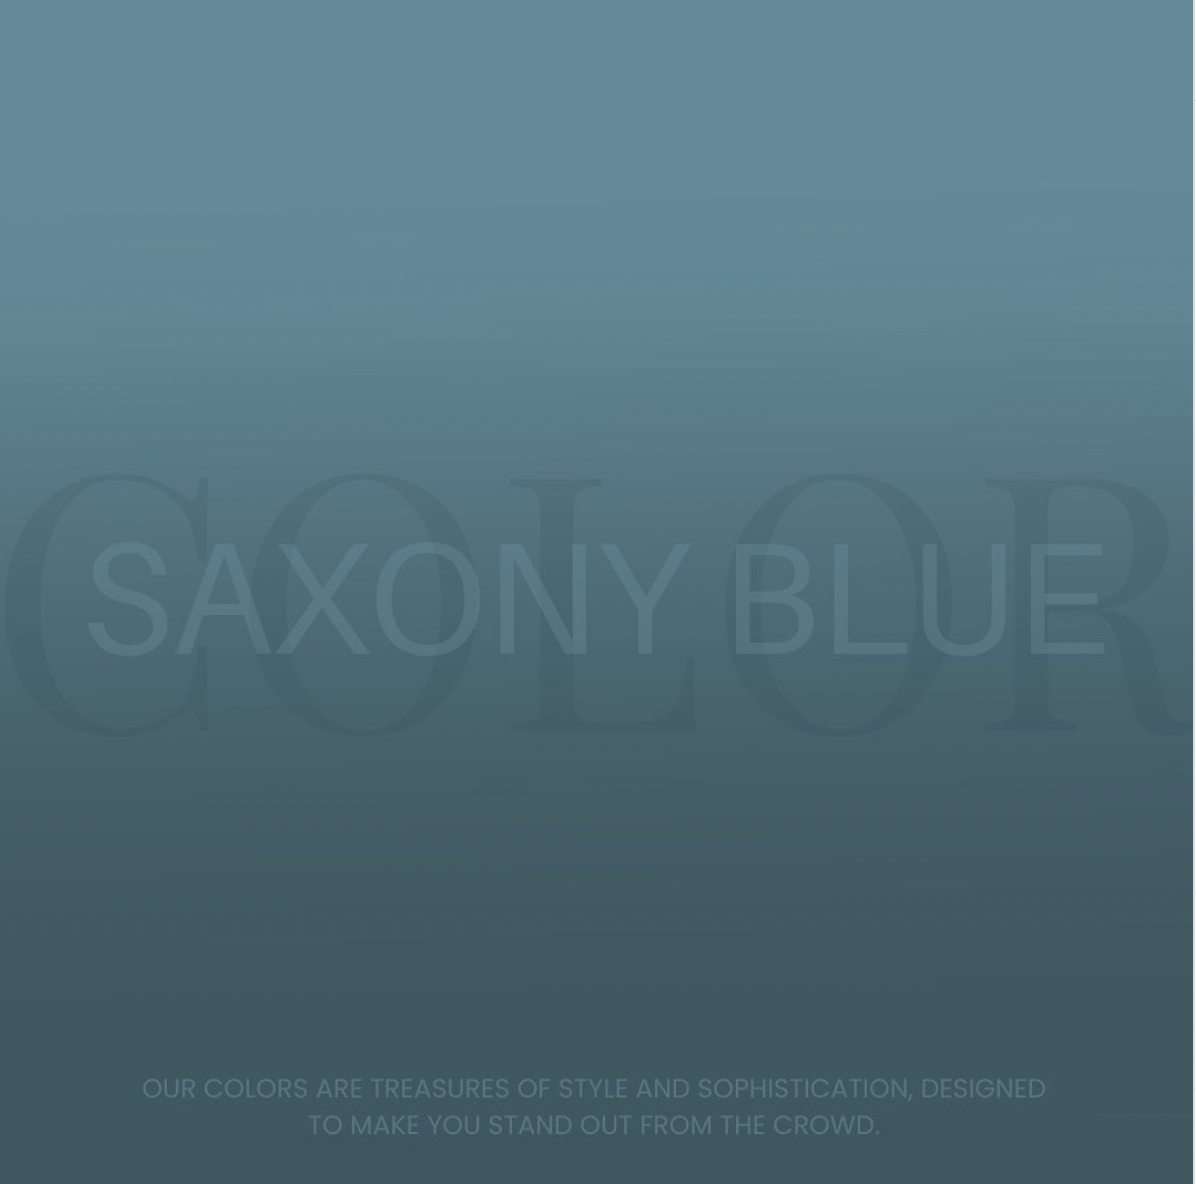 SAXONY BLUE